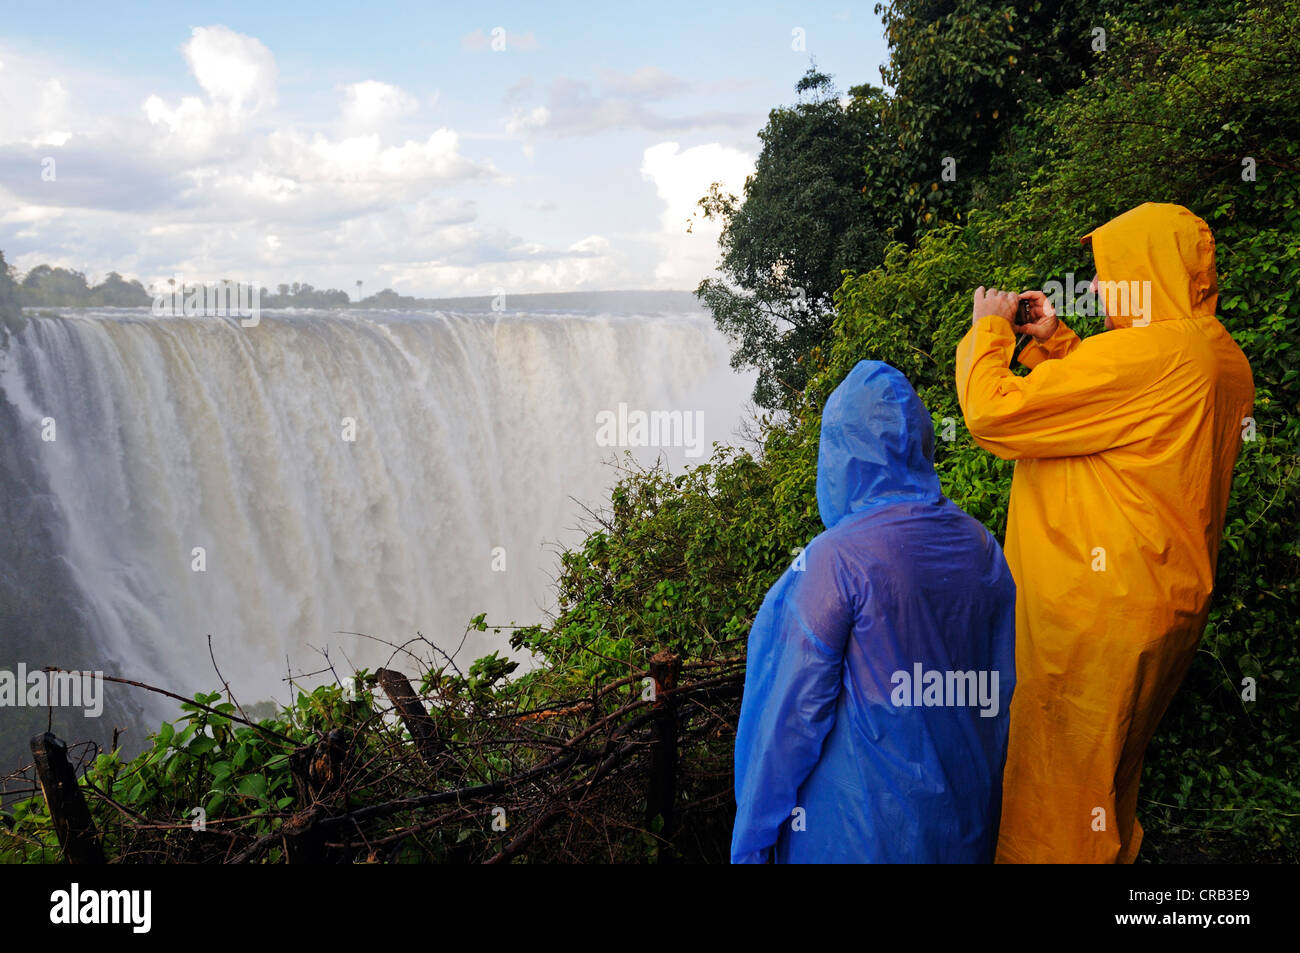 Tourists in rain jackets photographing the Victoria Falls, waterfall on the Zimbabwean side of the river Zambezi Stock Photo